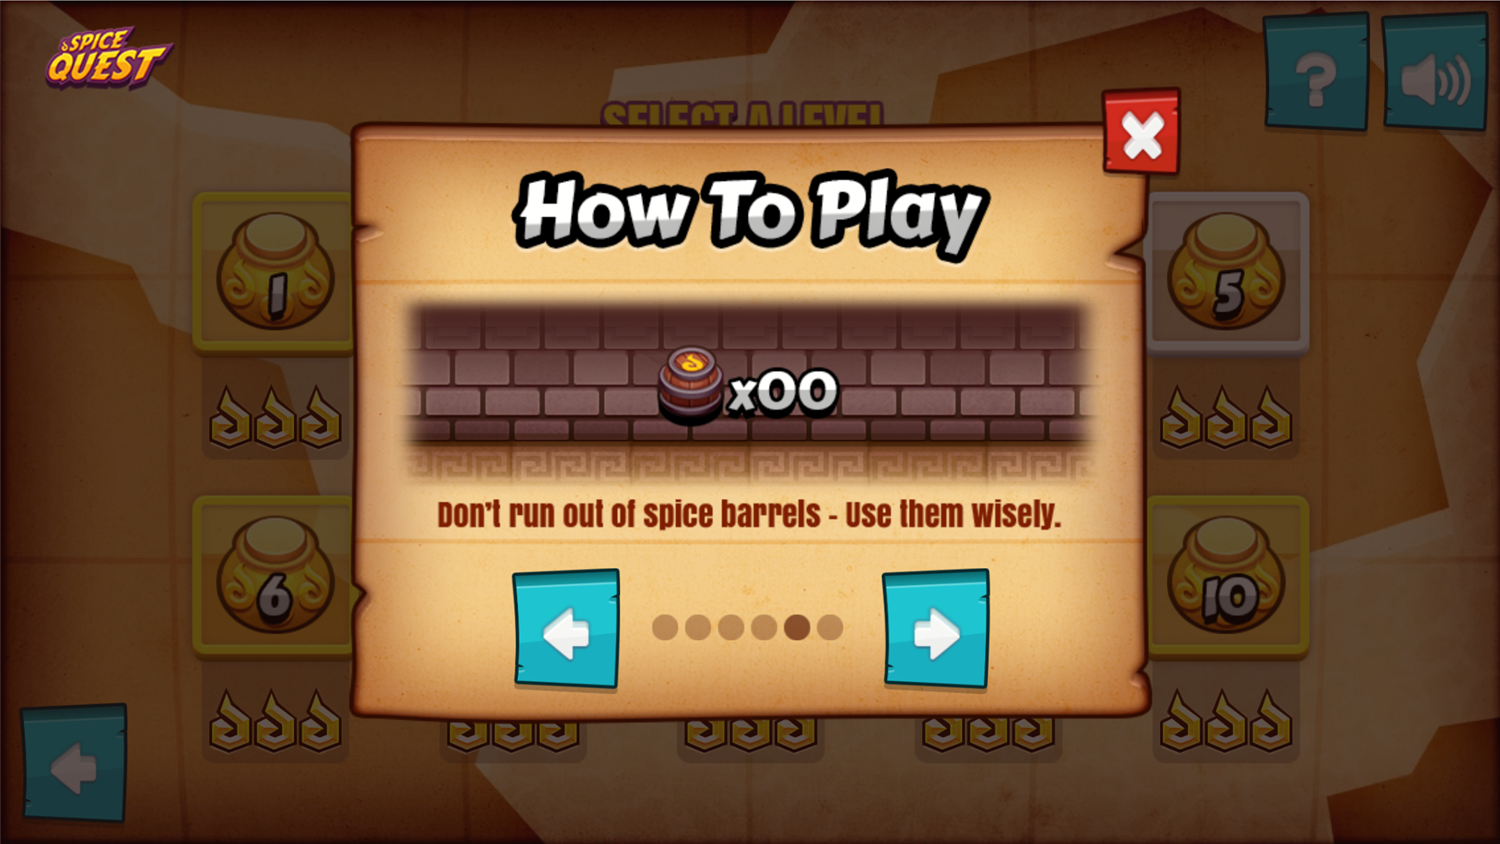 Spice Quest Game Barrel Limit Screenshot.